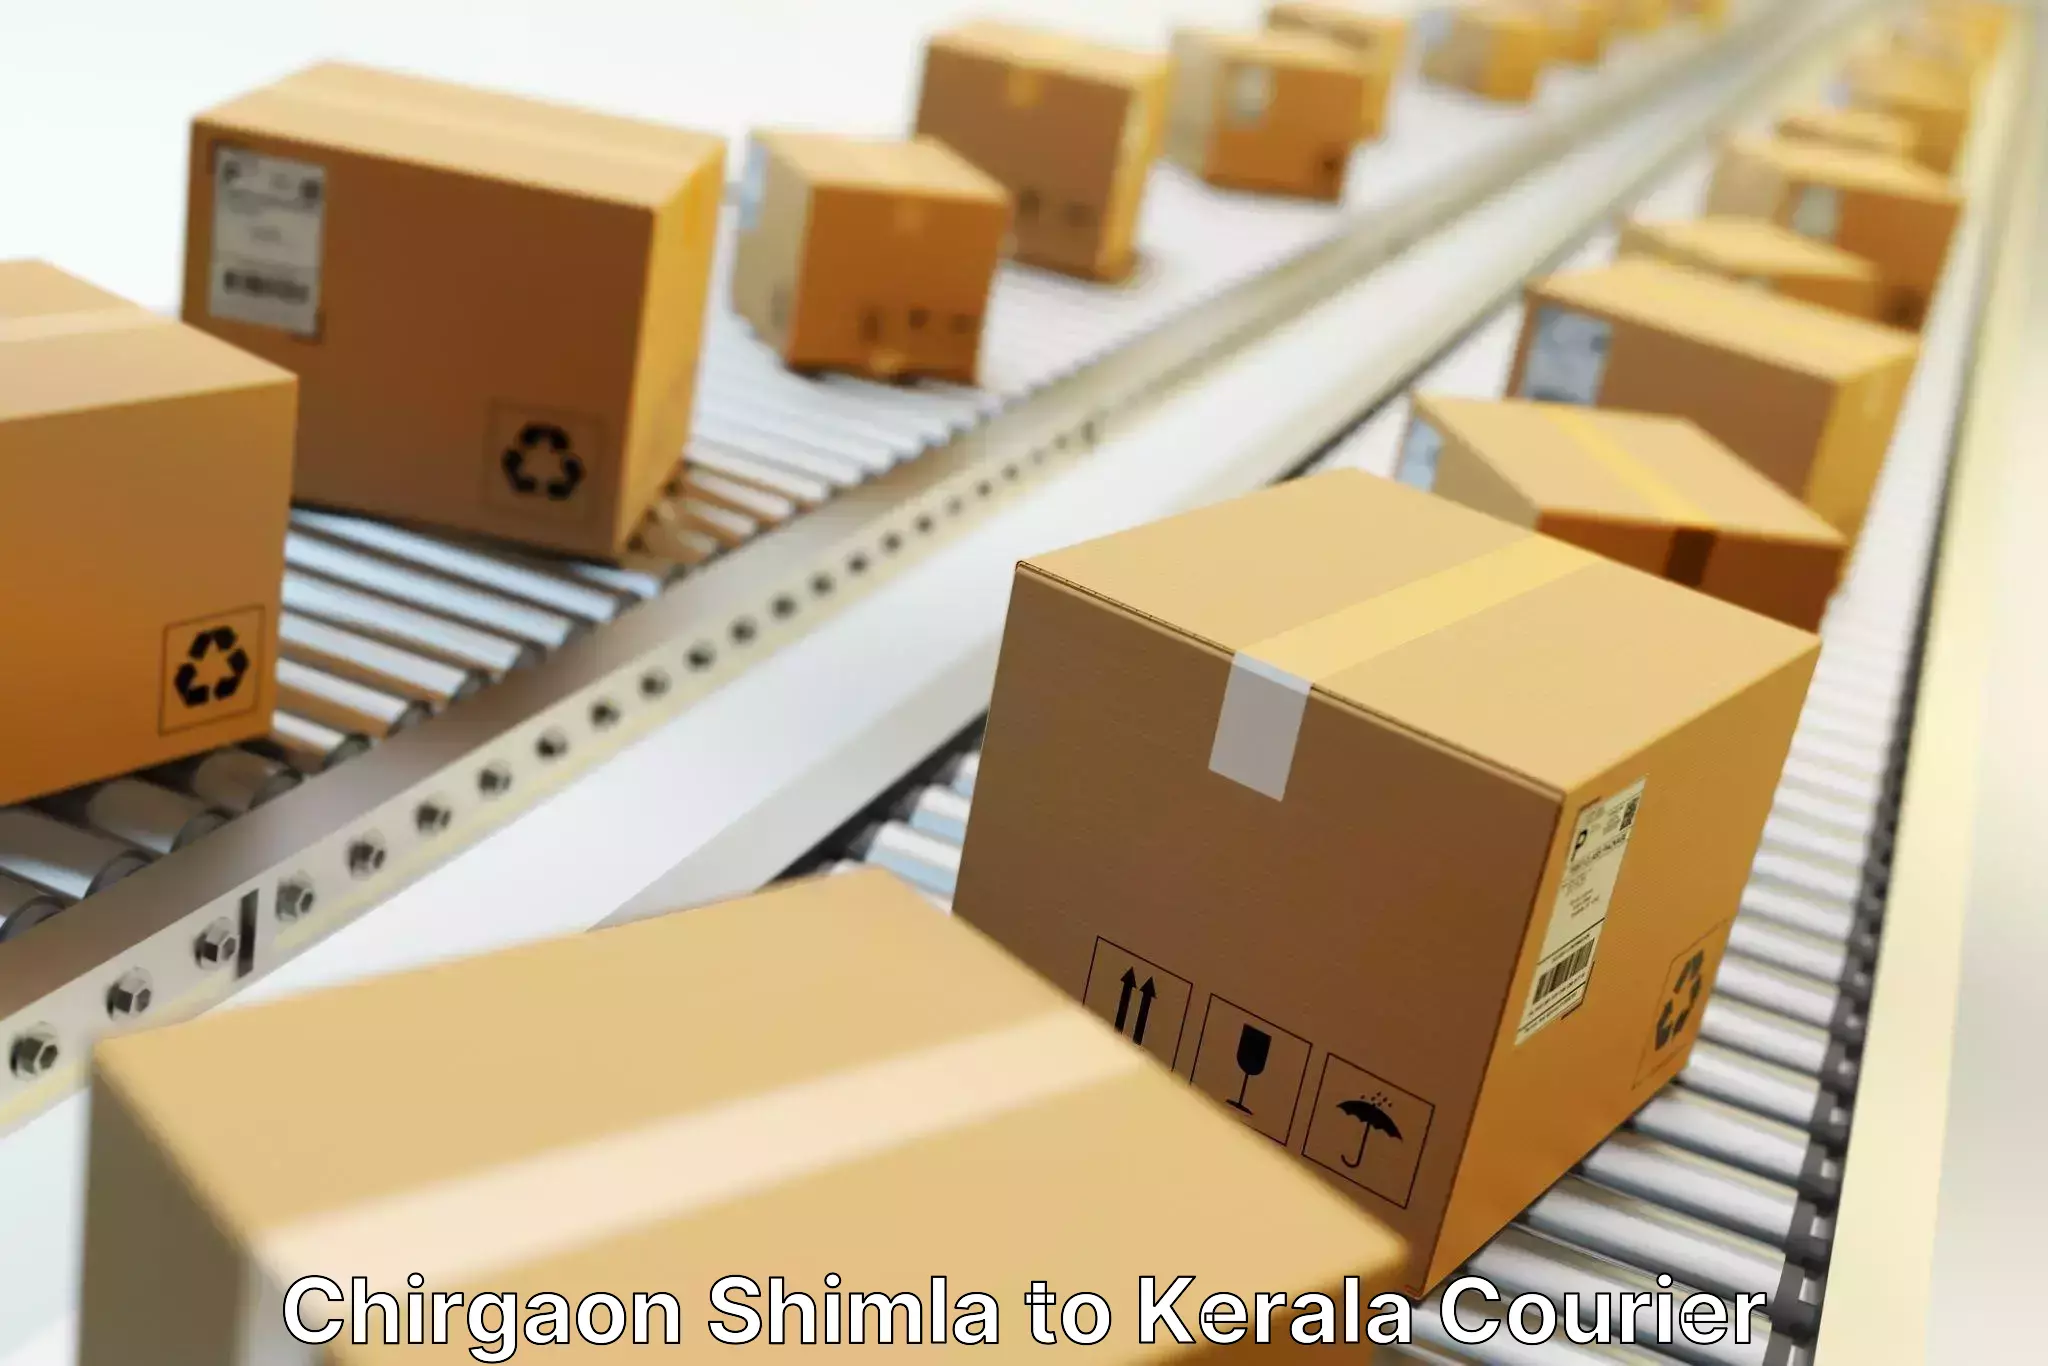 Cost-effective courier options Chirgaon Shimla to Cochin Port Kochi